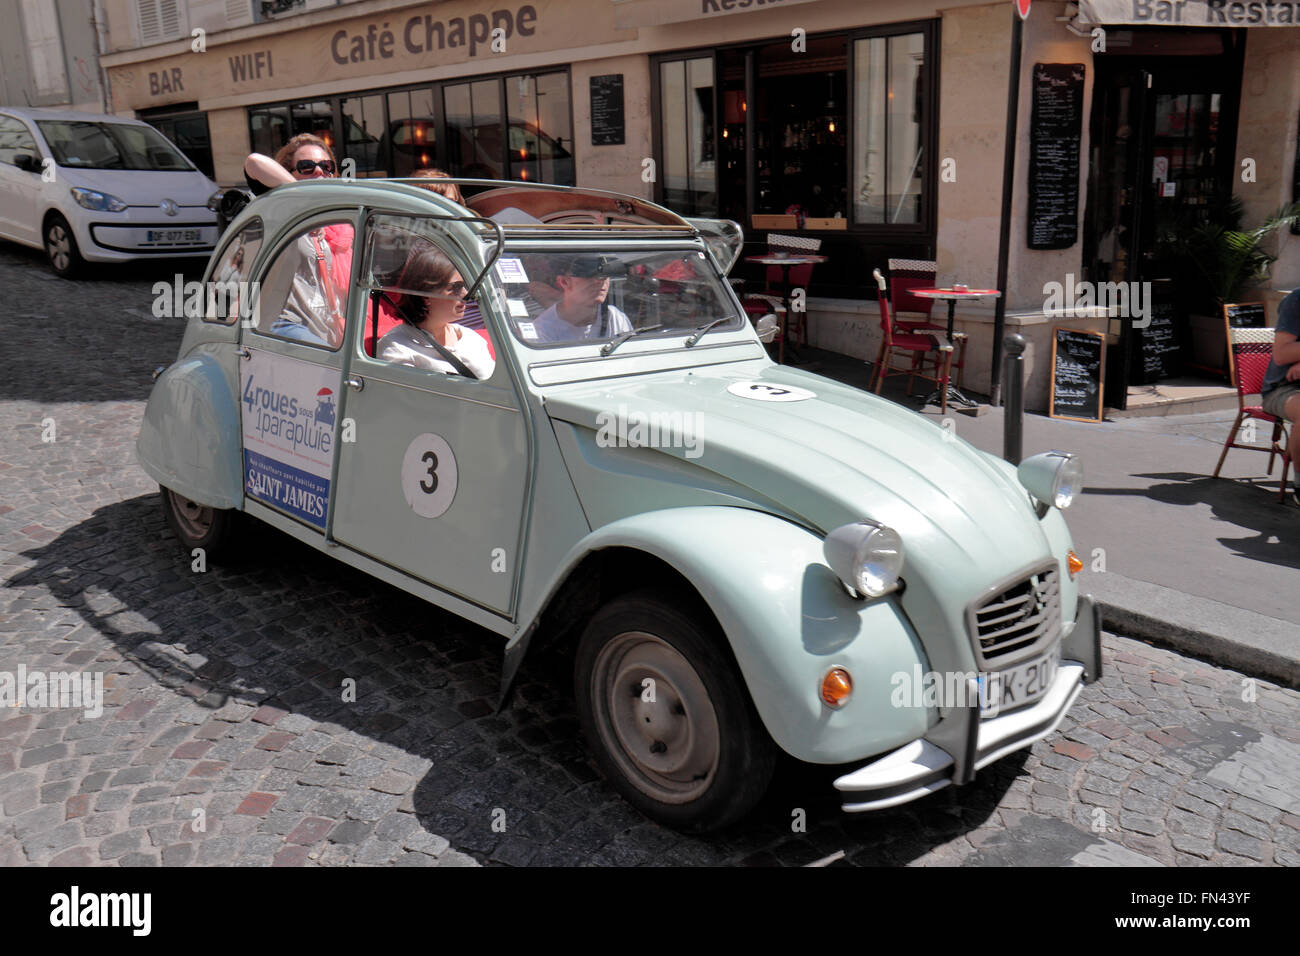 A 2CV rental car (from 4roues sous 1parapluie) touring Montmartre in Paris, France. Stock Photo